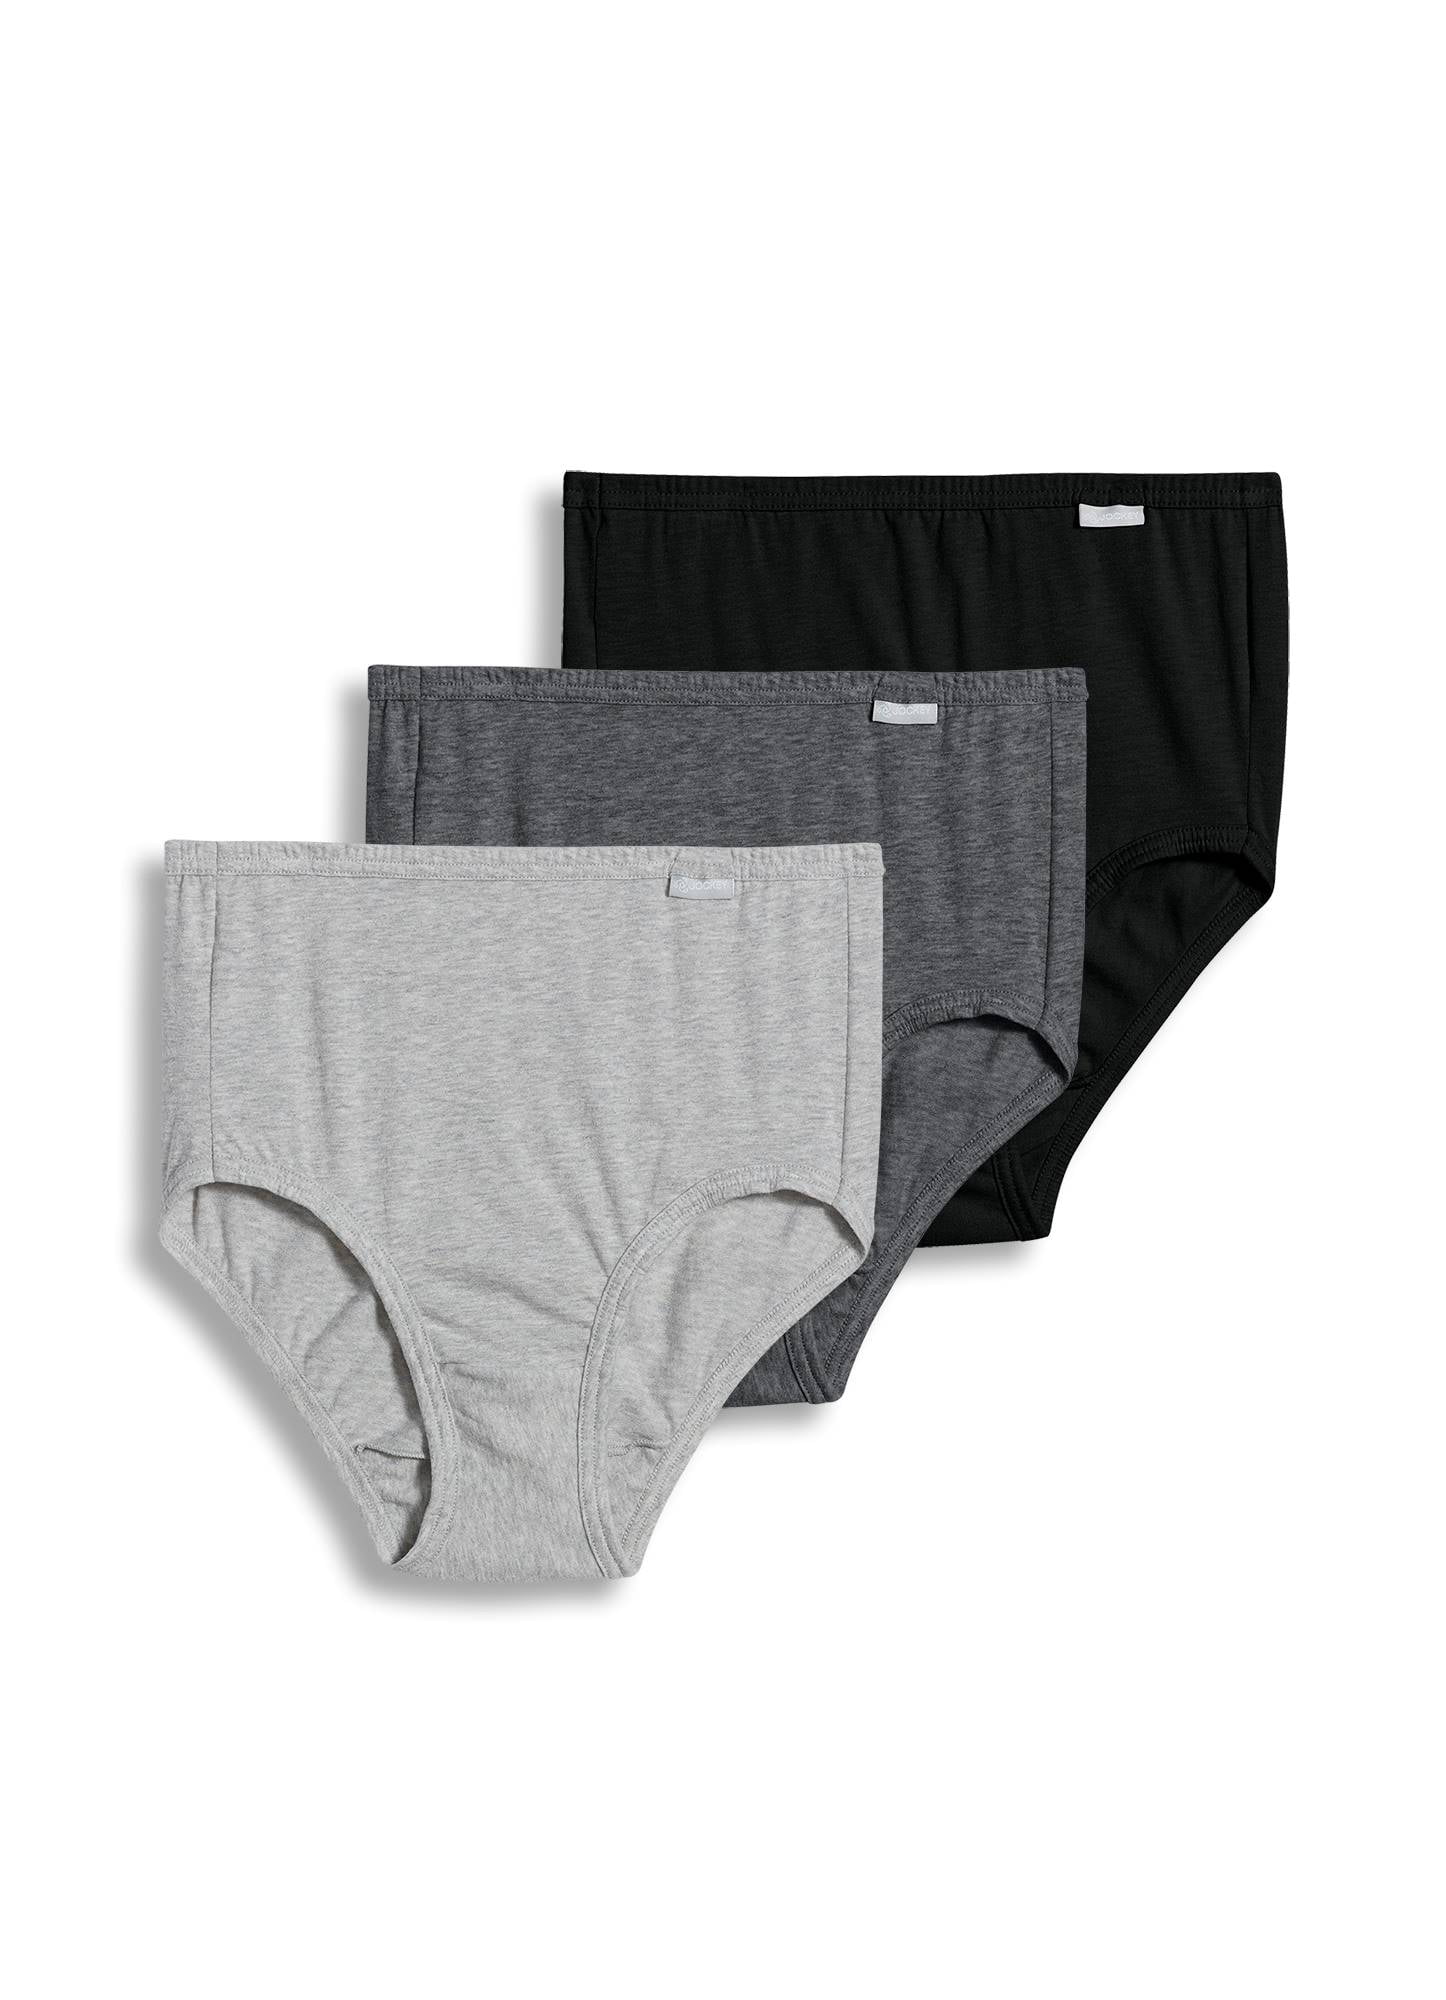 Jockey® Essentials Girls' Cotton Stretch Brief Panty - 3 Pack, Sizes S-XL (6-16)  